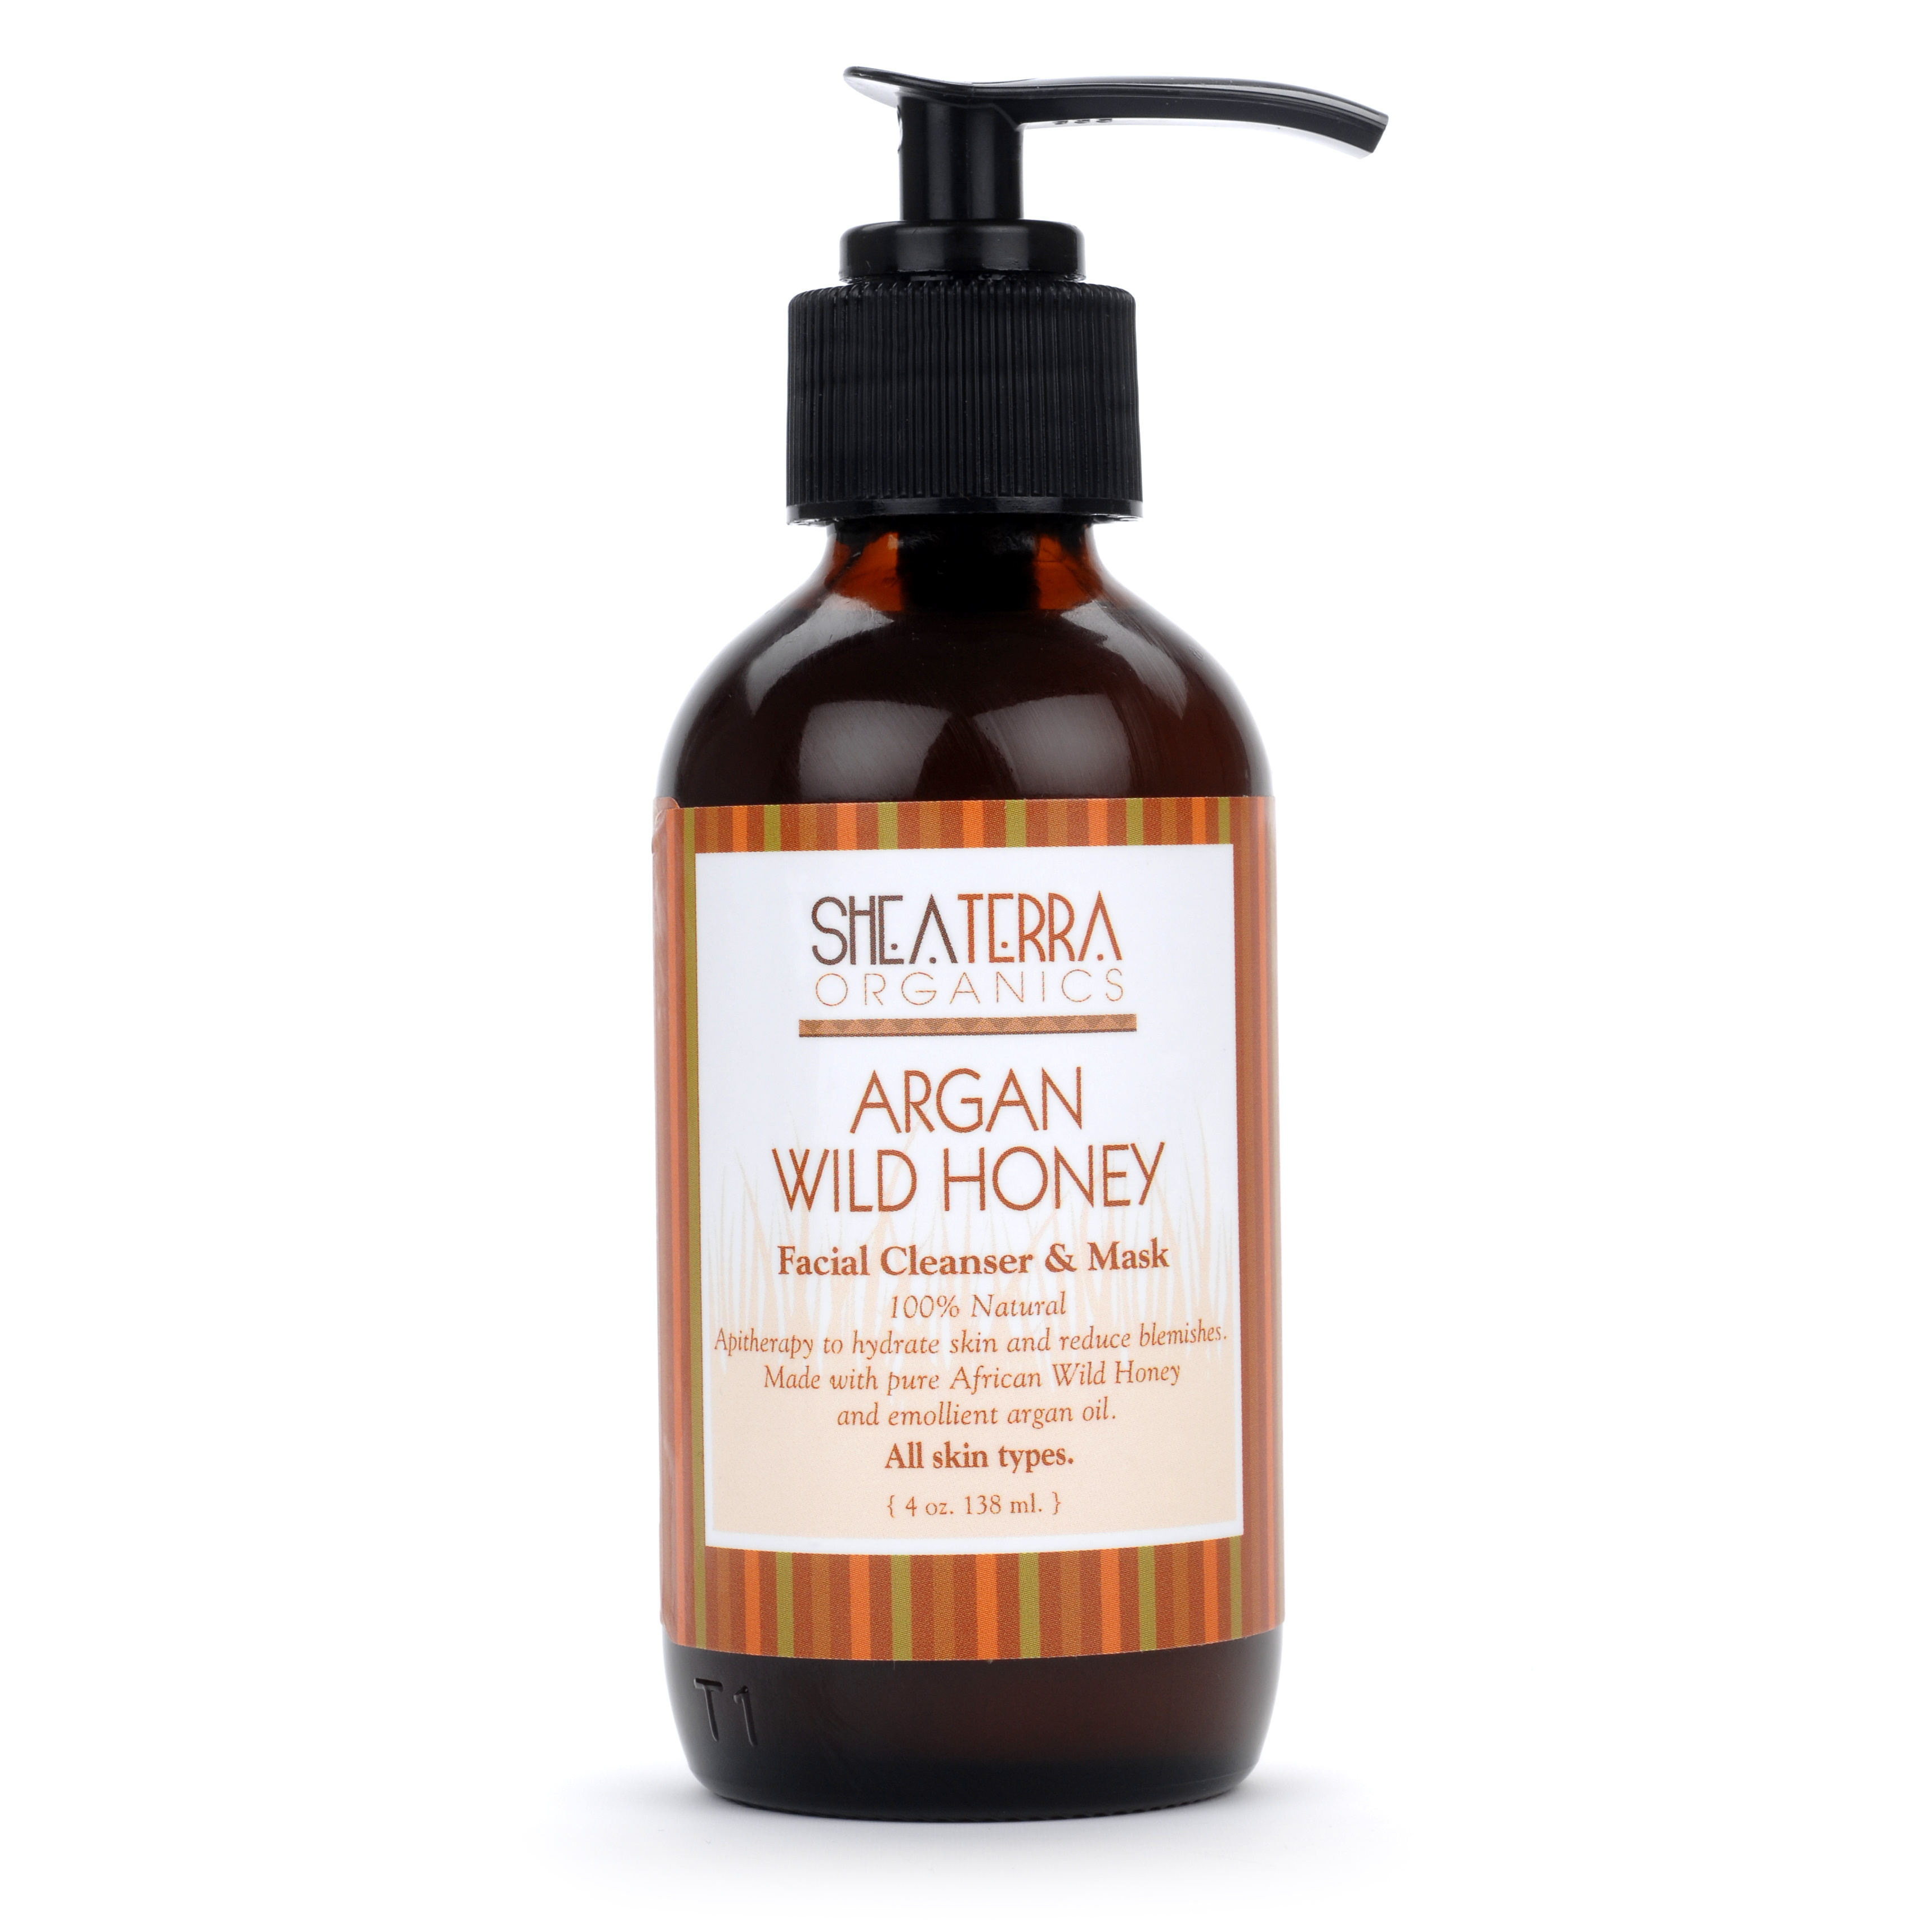 Shea Terra Organics Argan Wild Honey Facial Cleanser & Mask